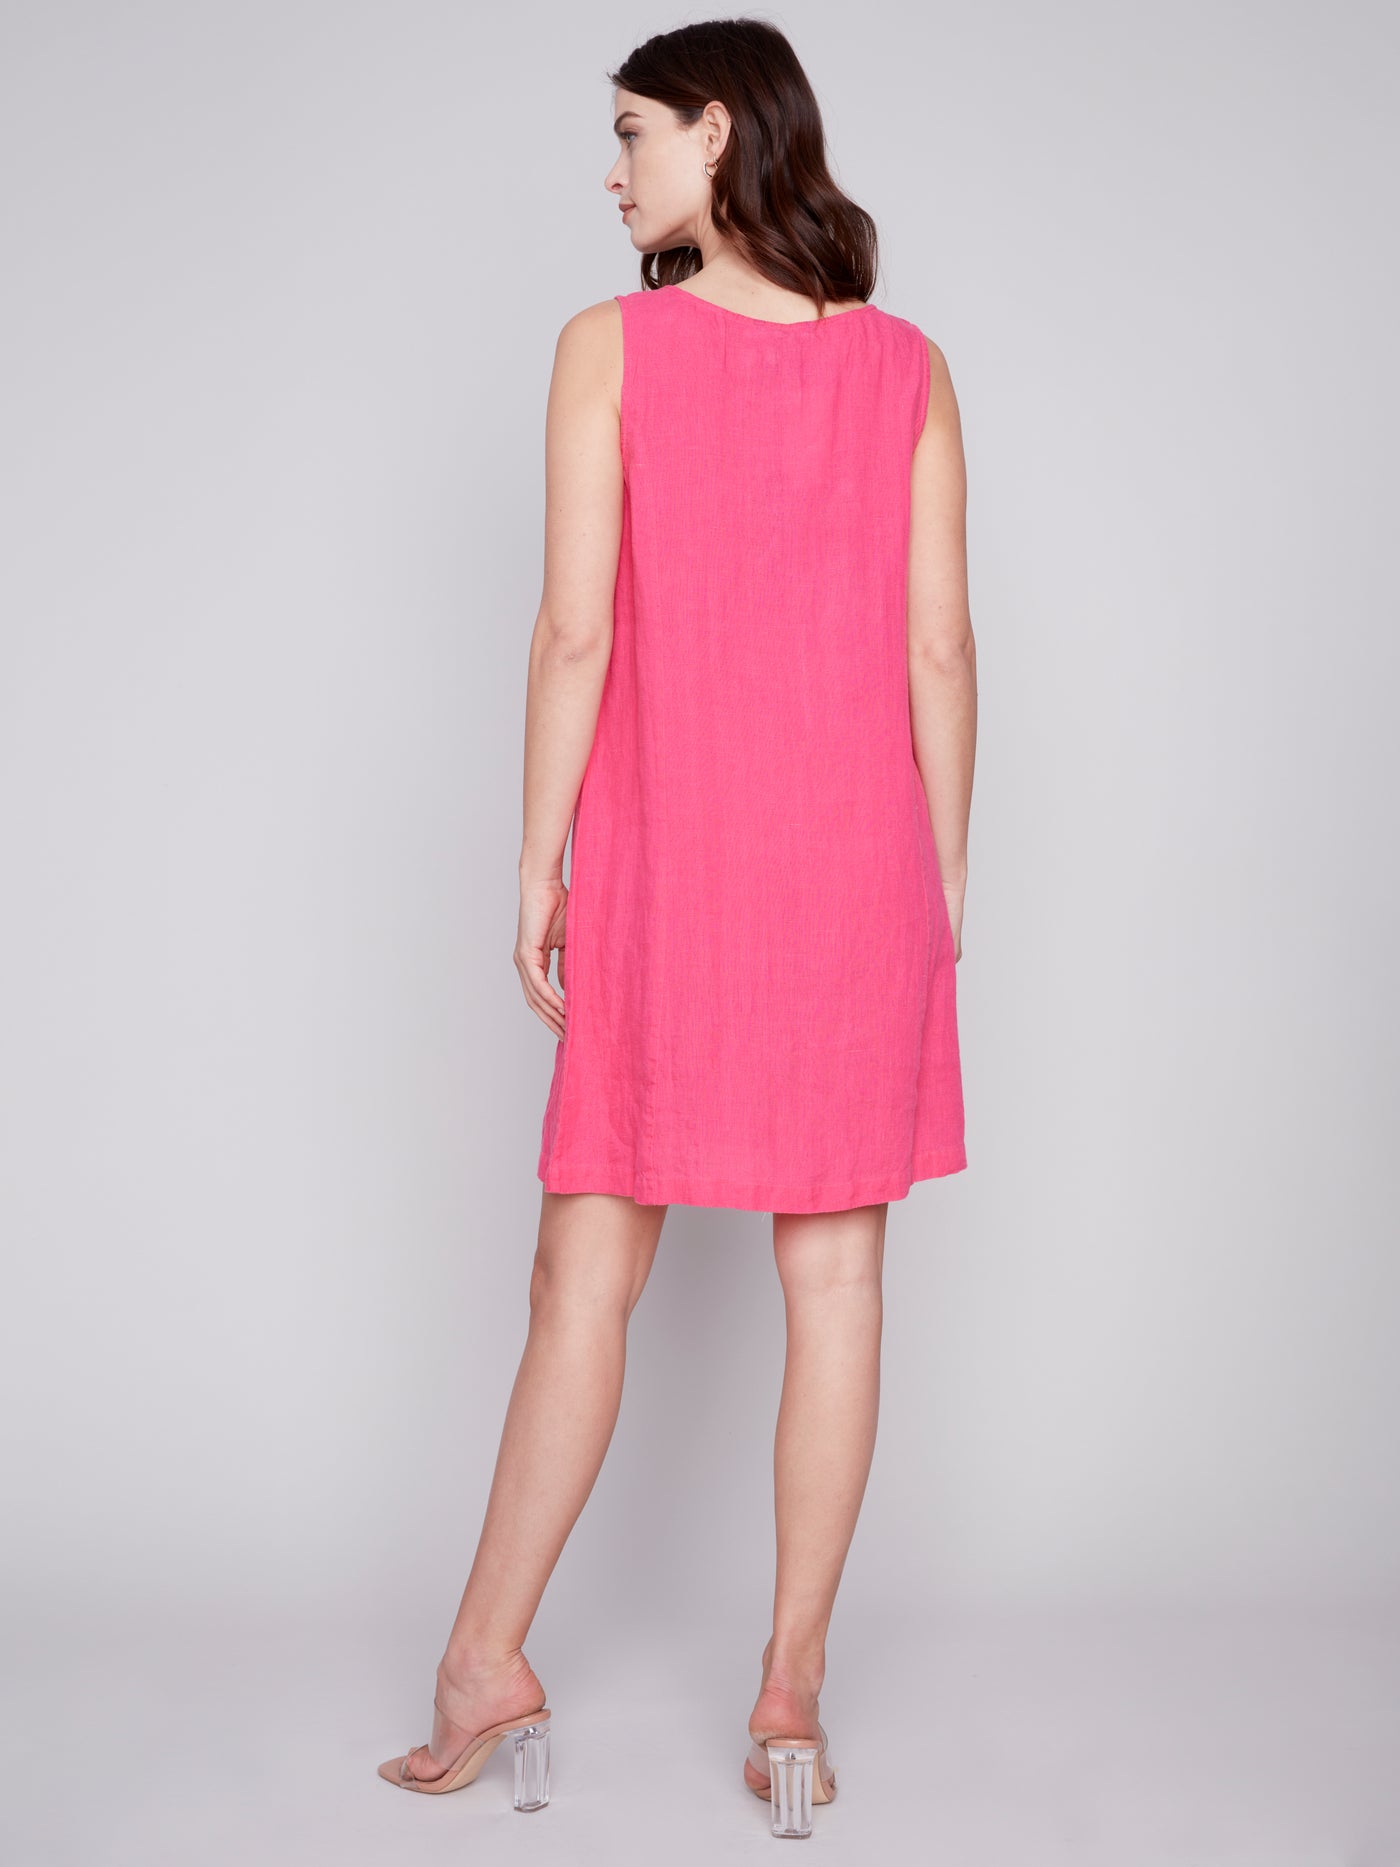 Charlie B Dress - Linen Solid - Pink Punch